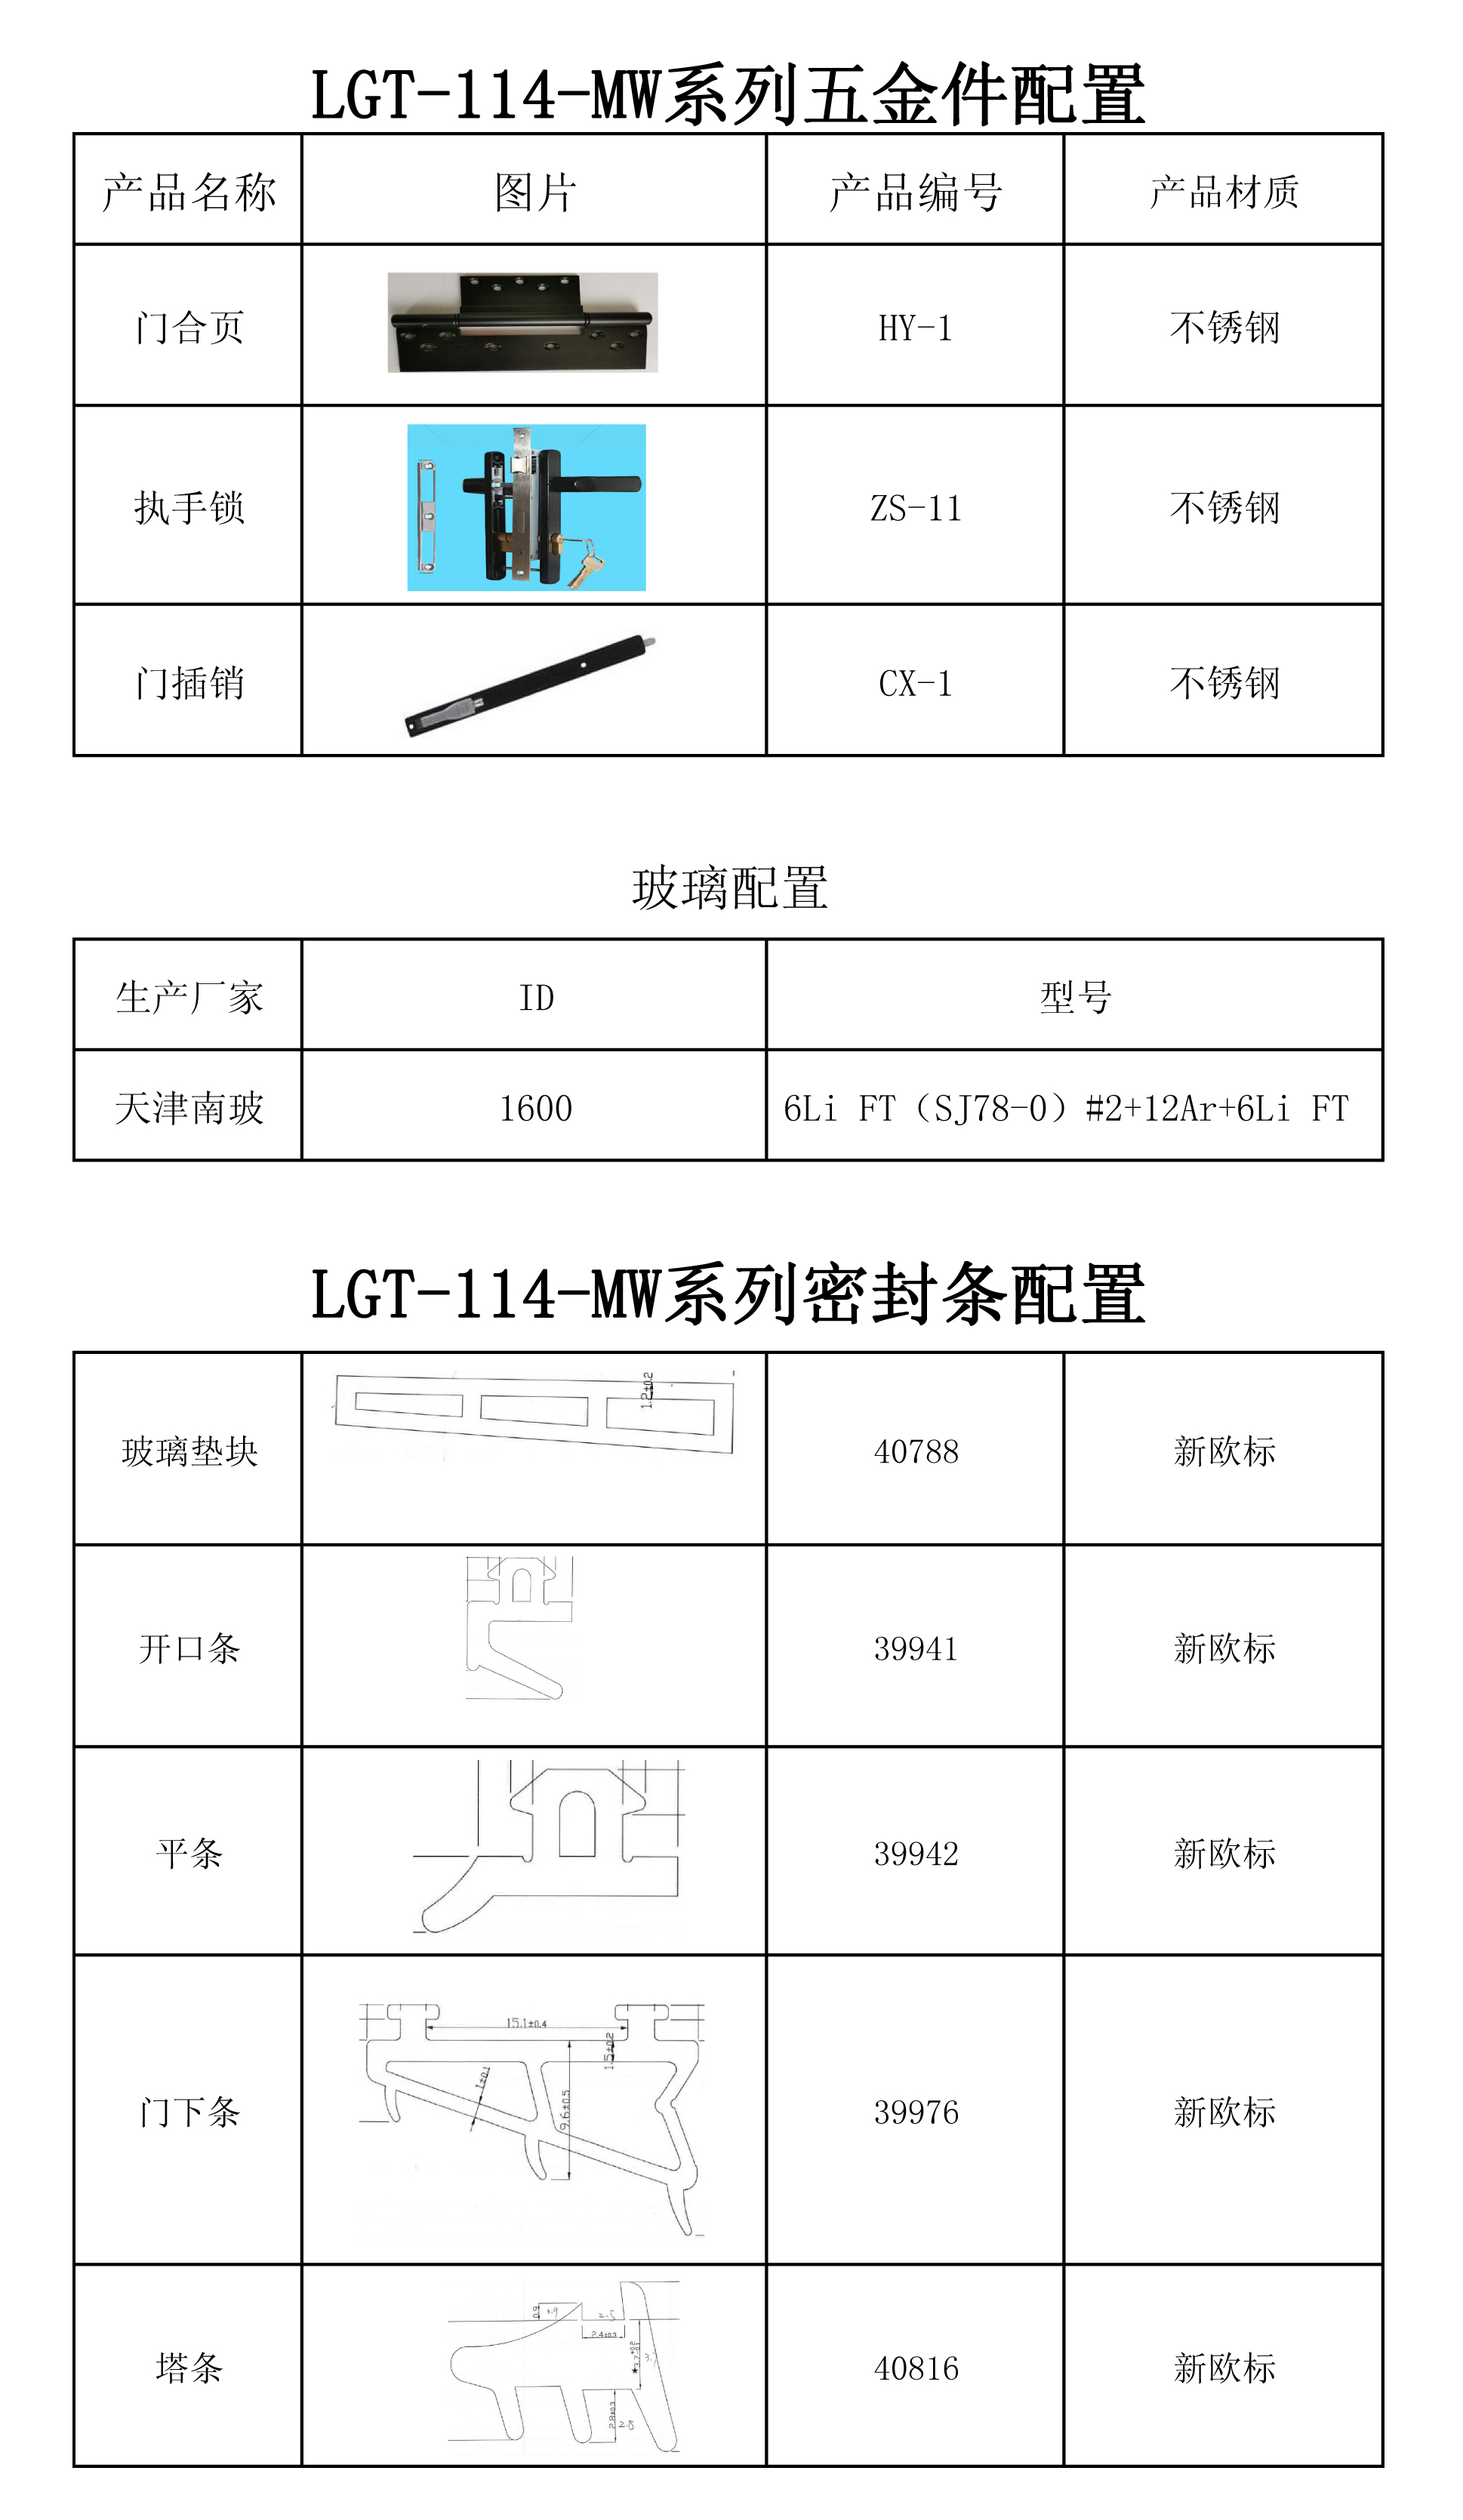 LGT-114-MW系列配置表.jpg